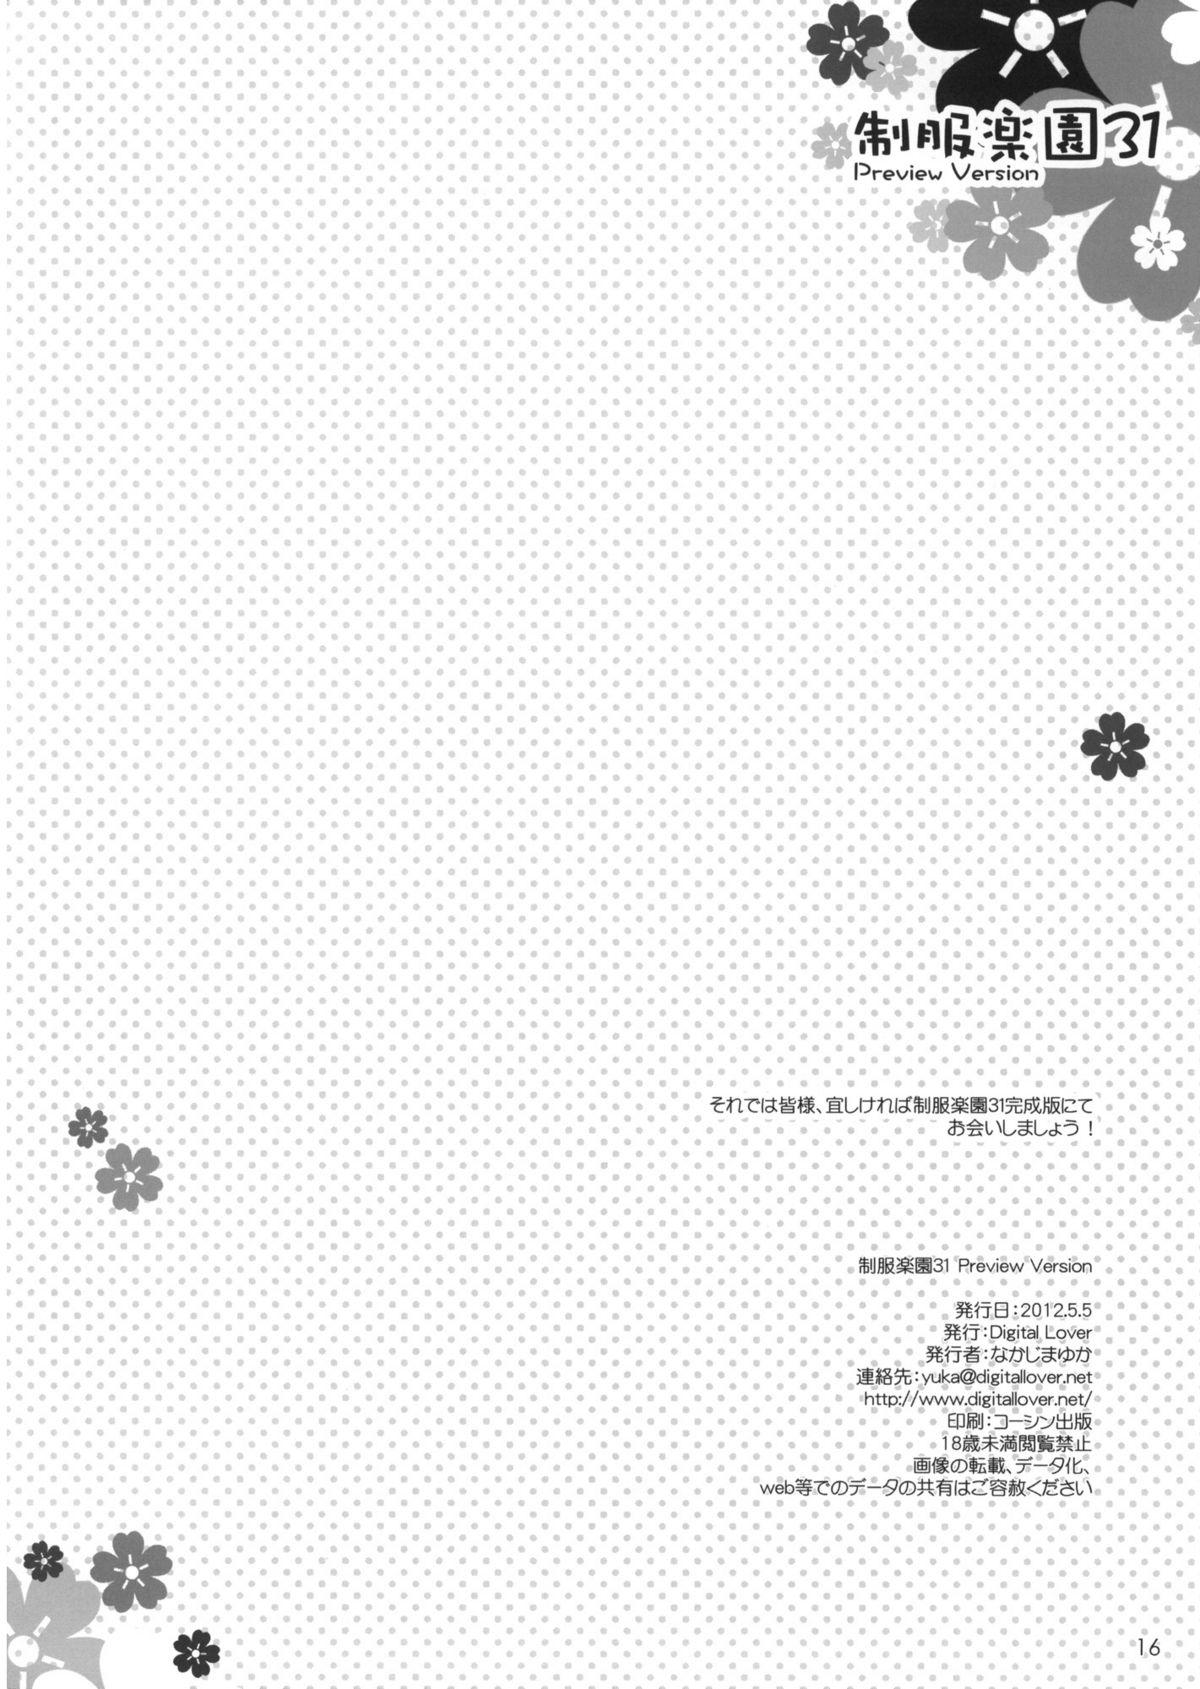 Letsdoeit Seifuku Rakuen 31 Preview Version Home - Page 16